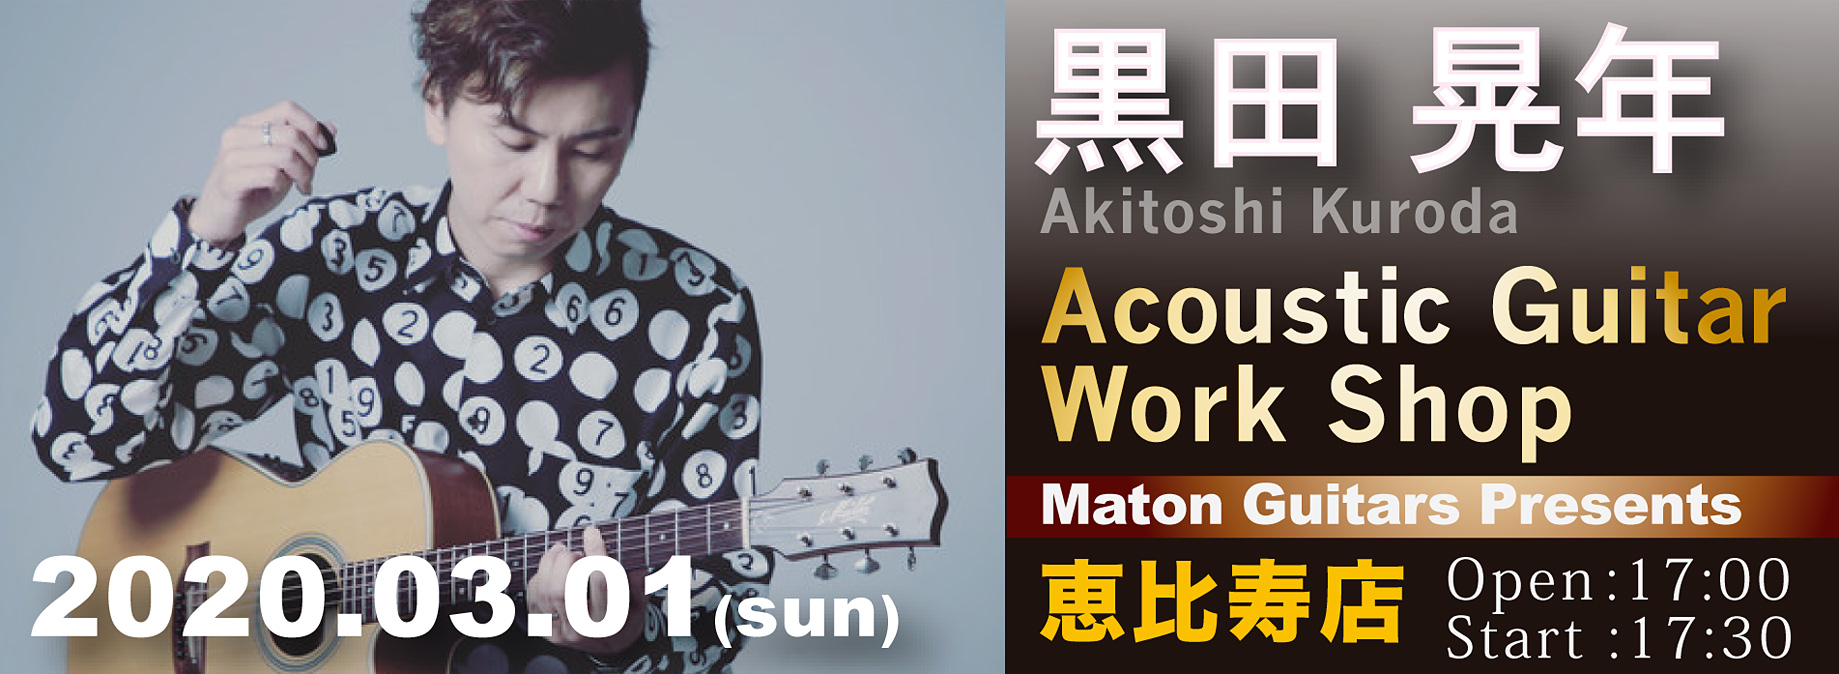 MATON Guitars Presents　
黒田晃年　〜アコースティック・ギターワークショップ〜【恵比寿店】のバナー